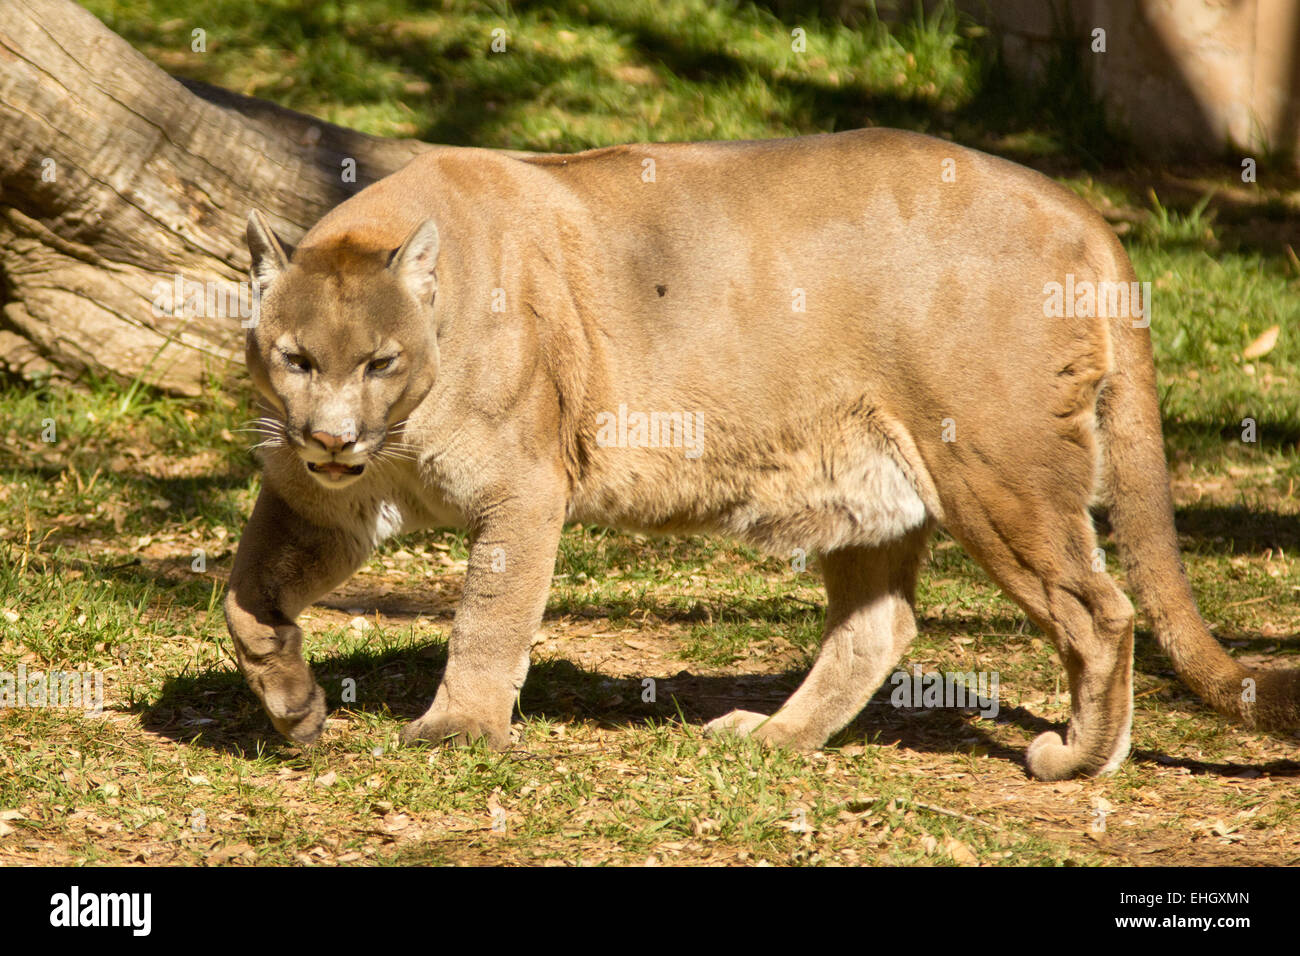 Puma, Cougar or Mountain Lion Stock Photo - Alamy